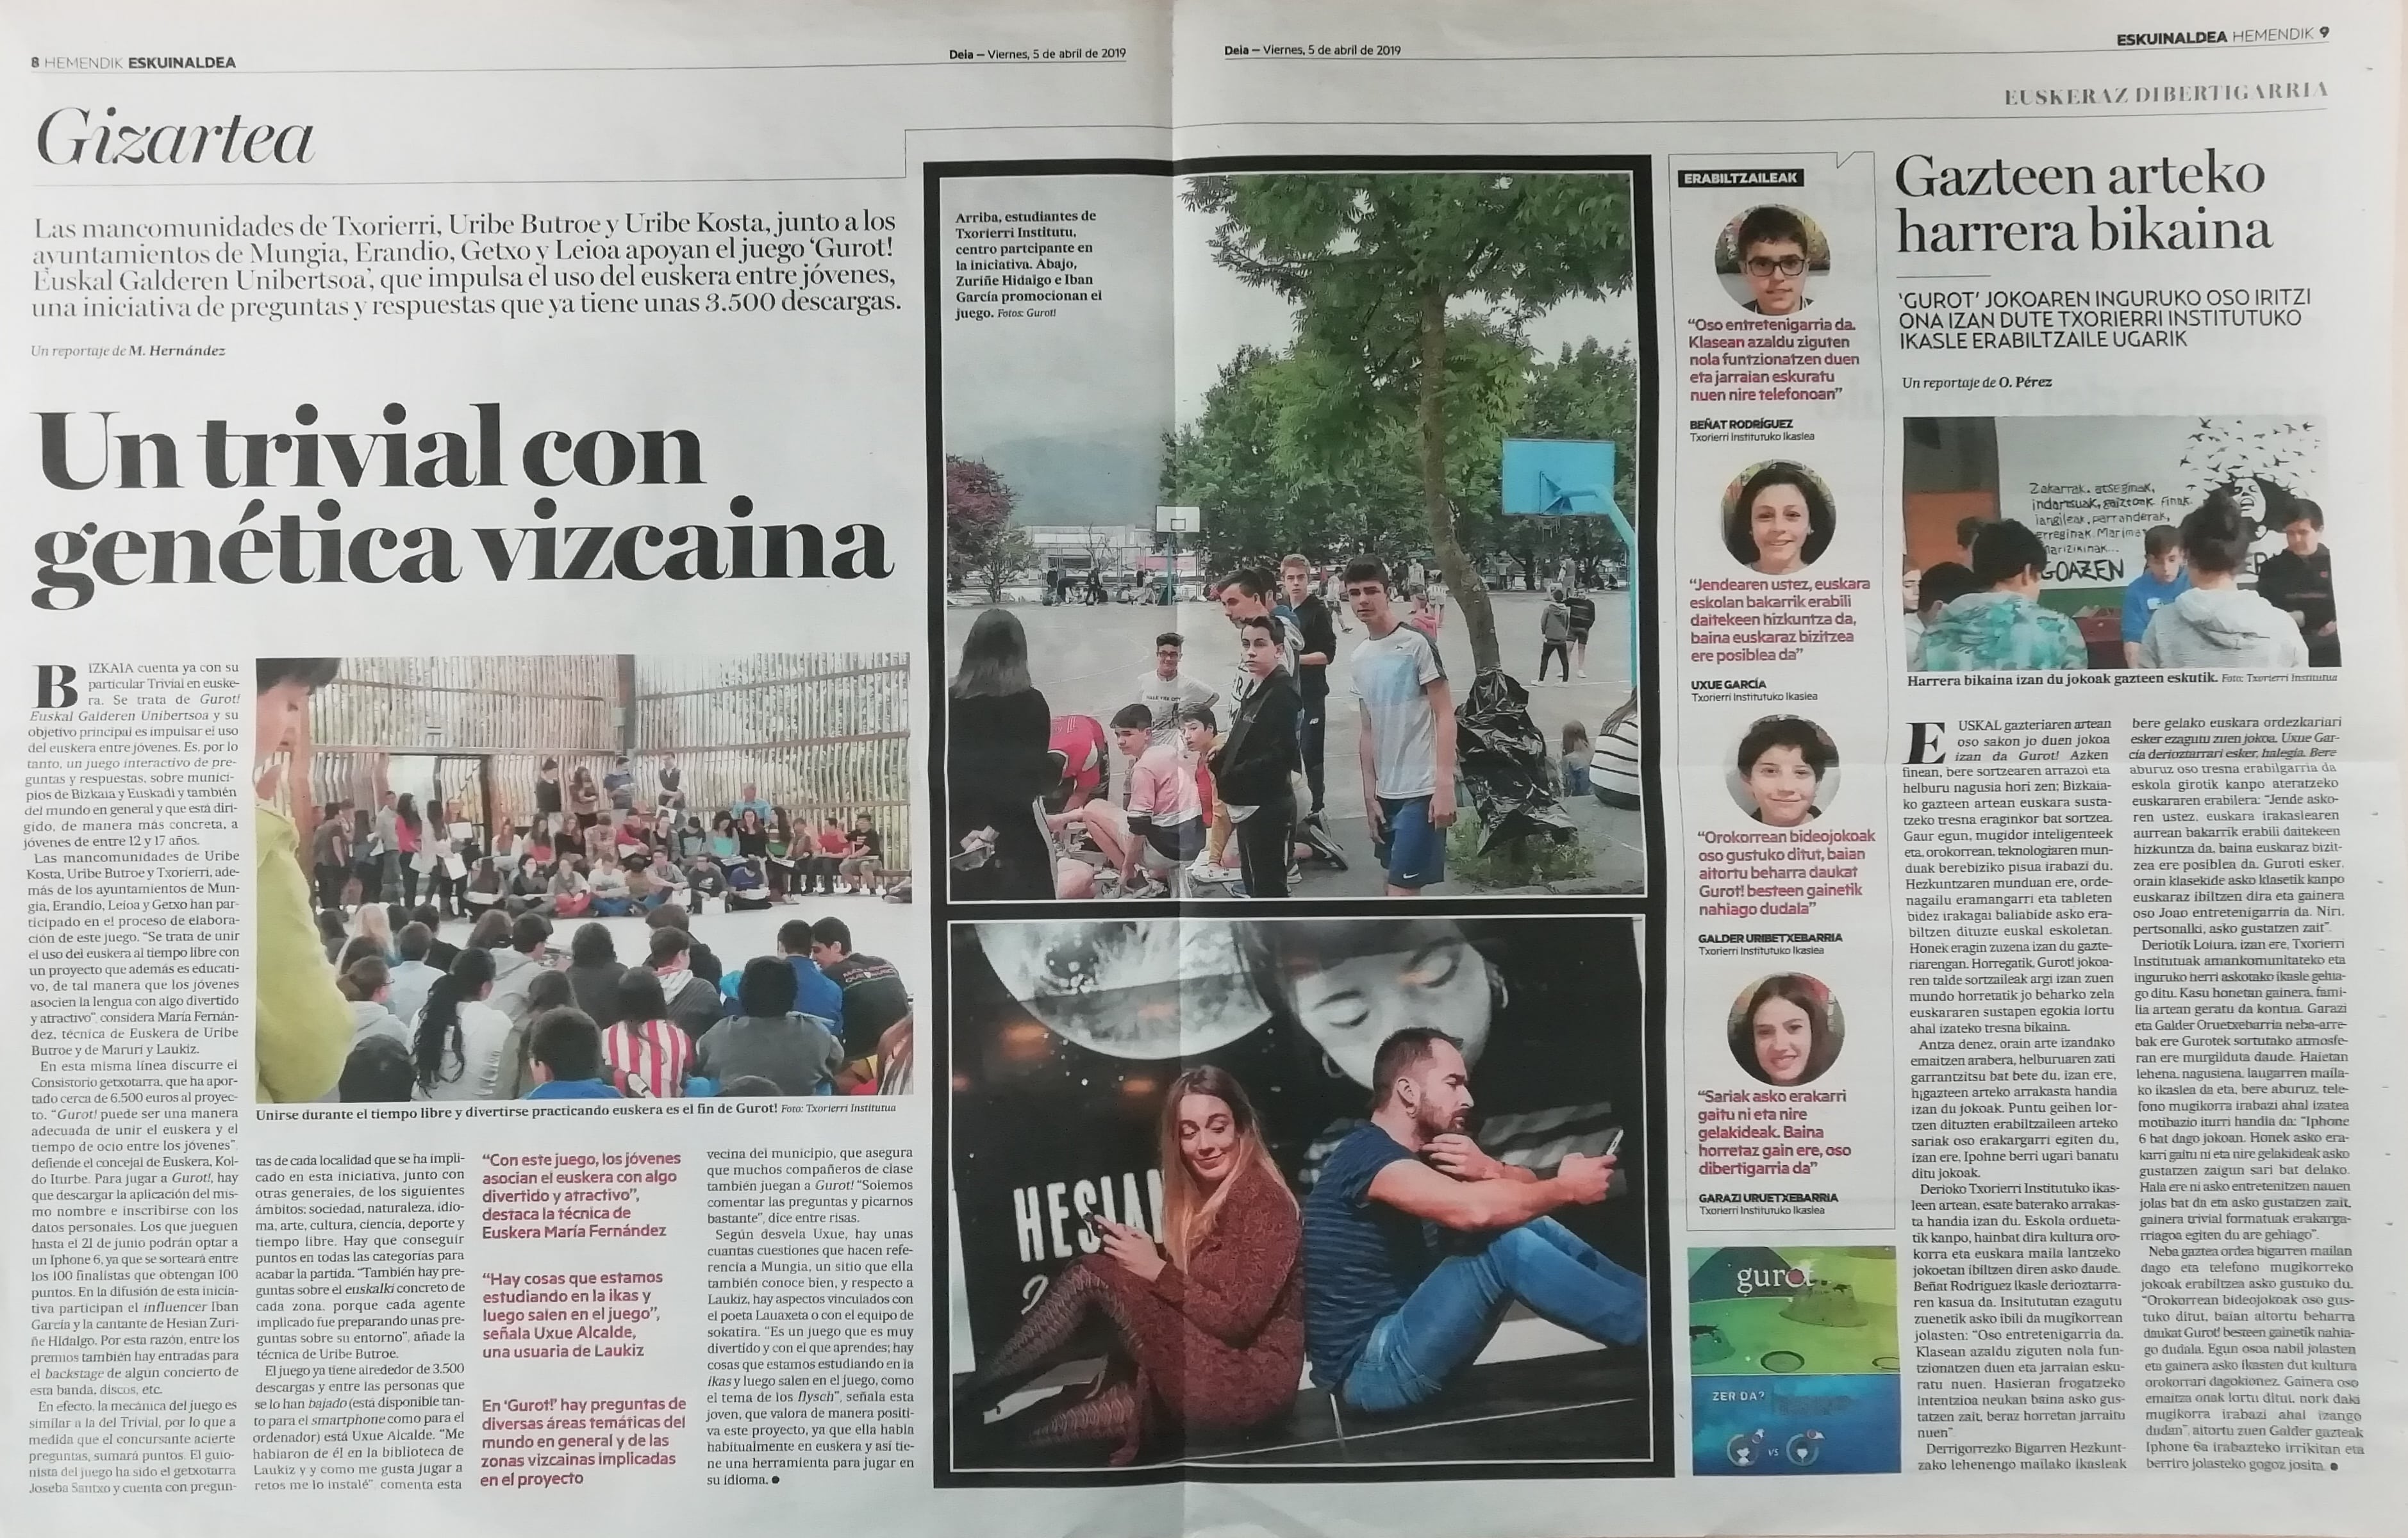 Fotografría del reportaje que el diario vasco Deia publicó sobre Gurot!, el trivial de Gestionet que fomenta el uso del euskera.